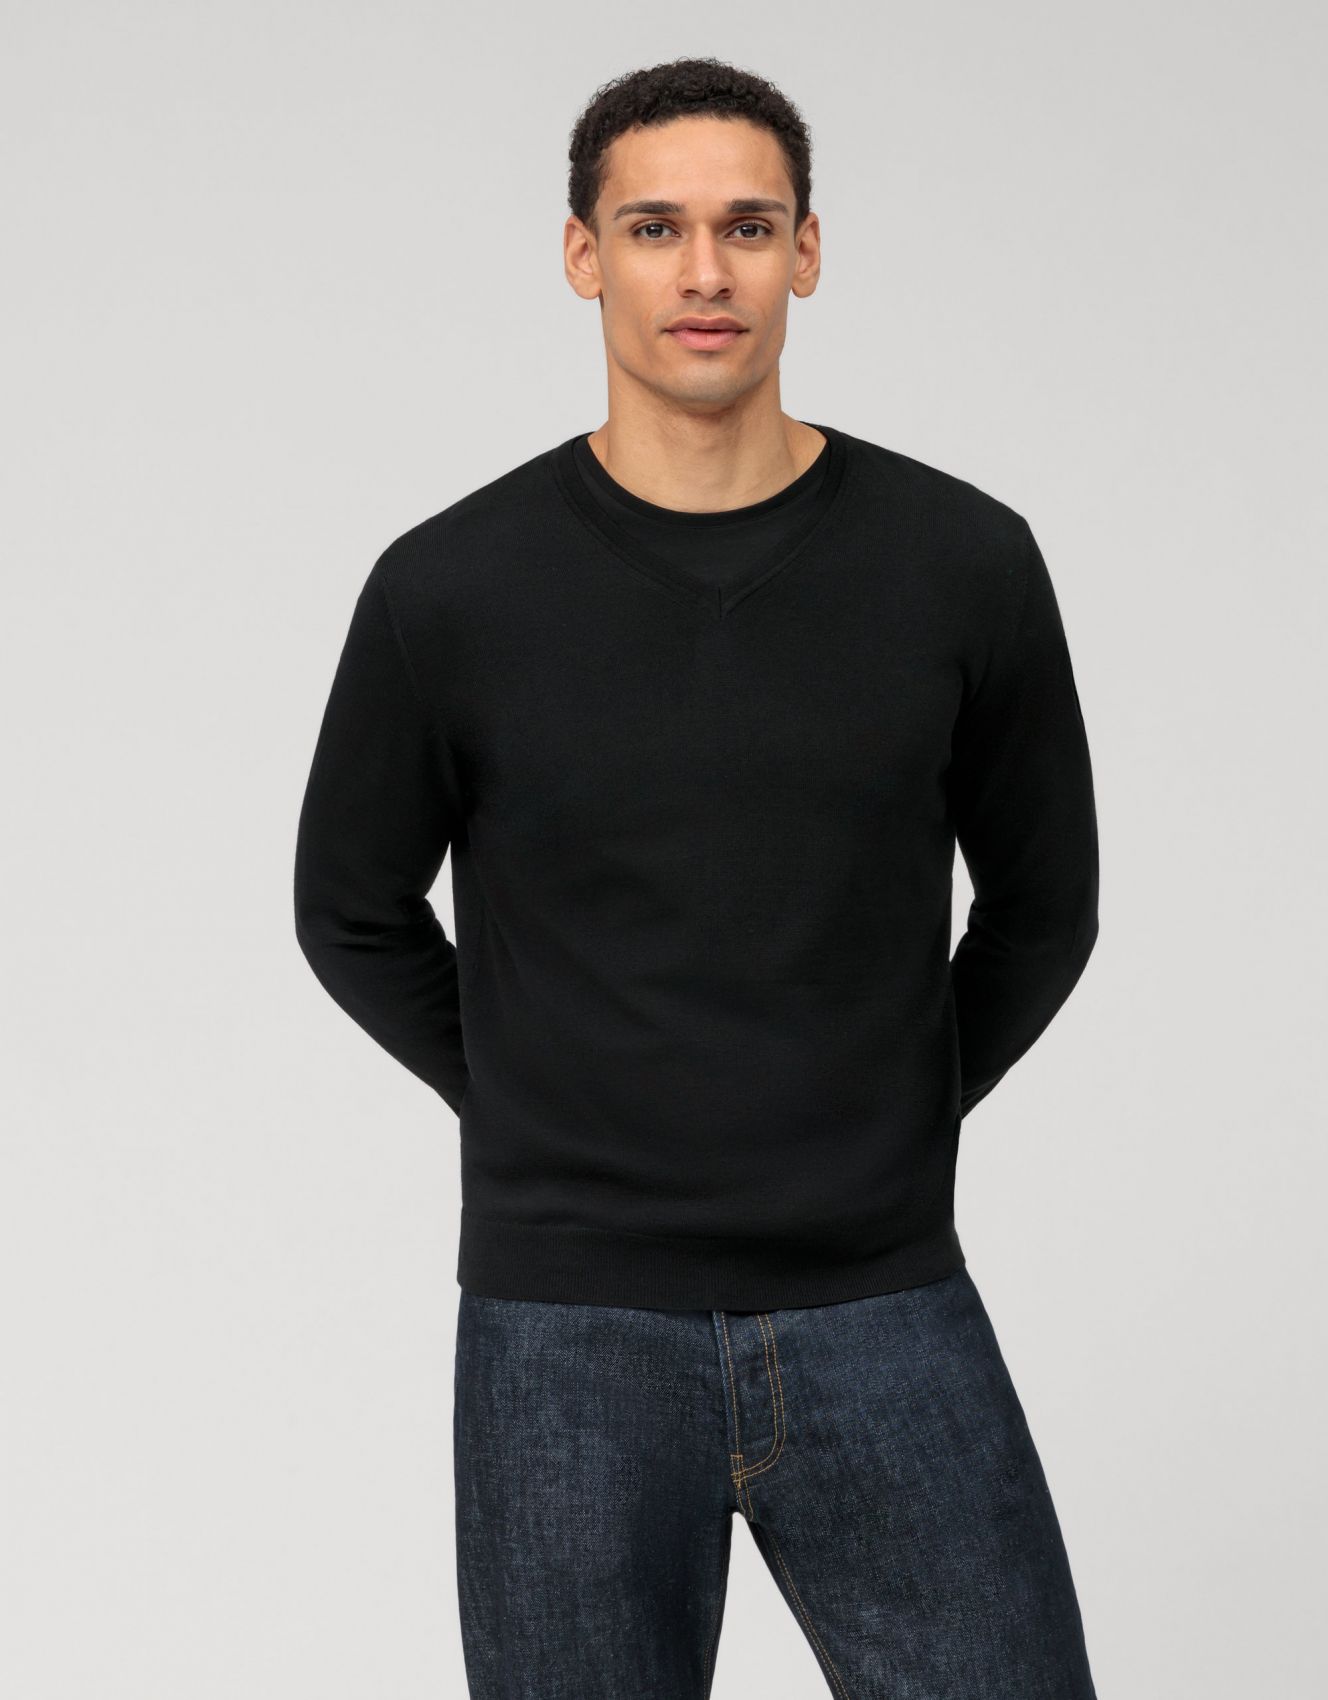 Men\'s Olymp V-neck Jersey Black - Extrafine Merino Wool Men\'s clothing